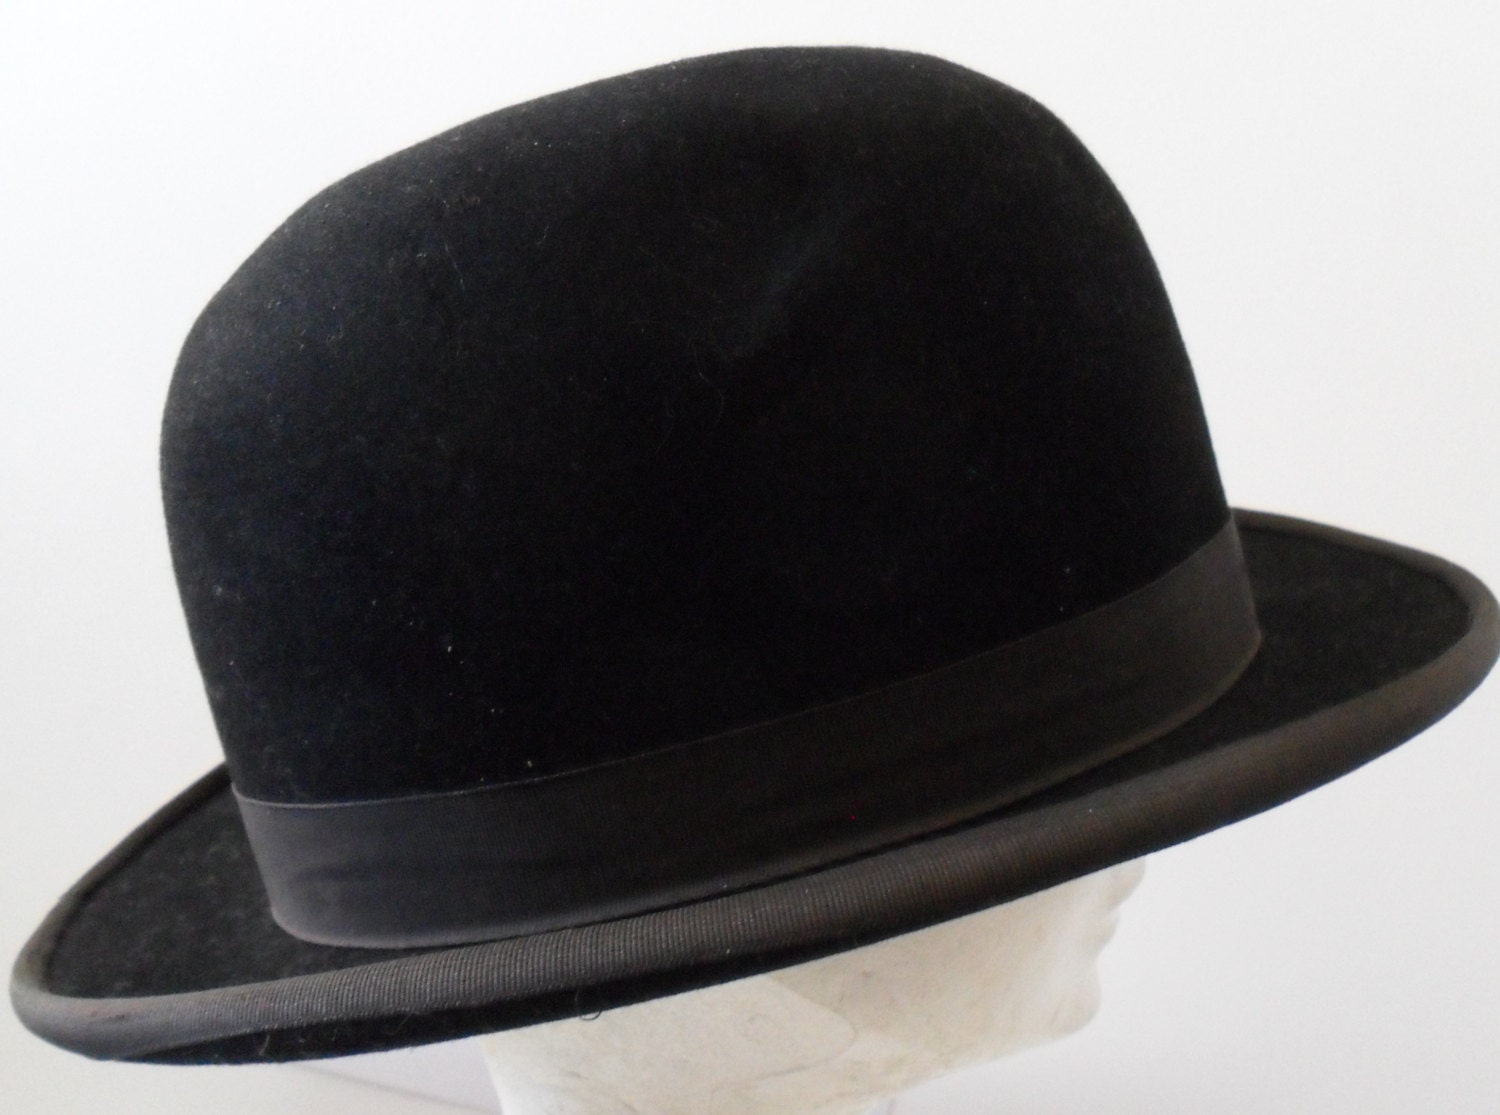 Pre 1940s London Bowler Hat by Hepworths of London